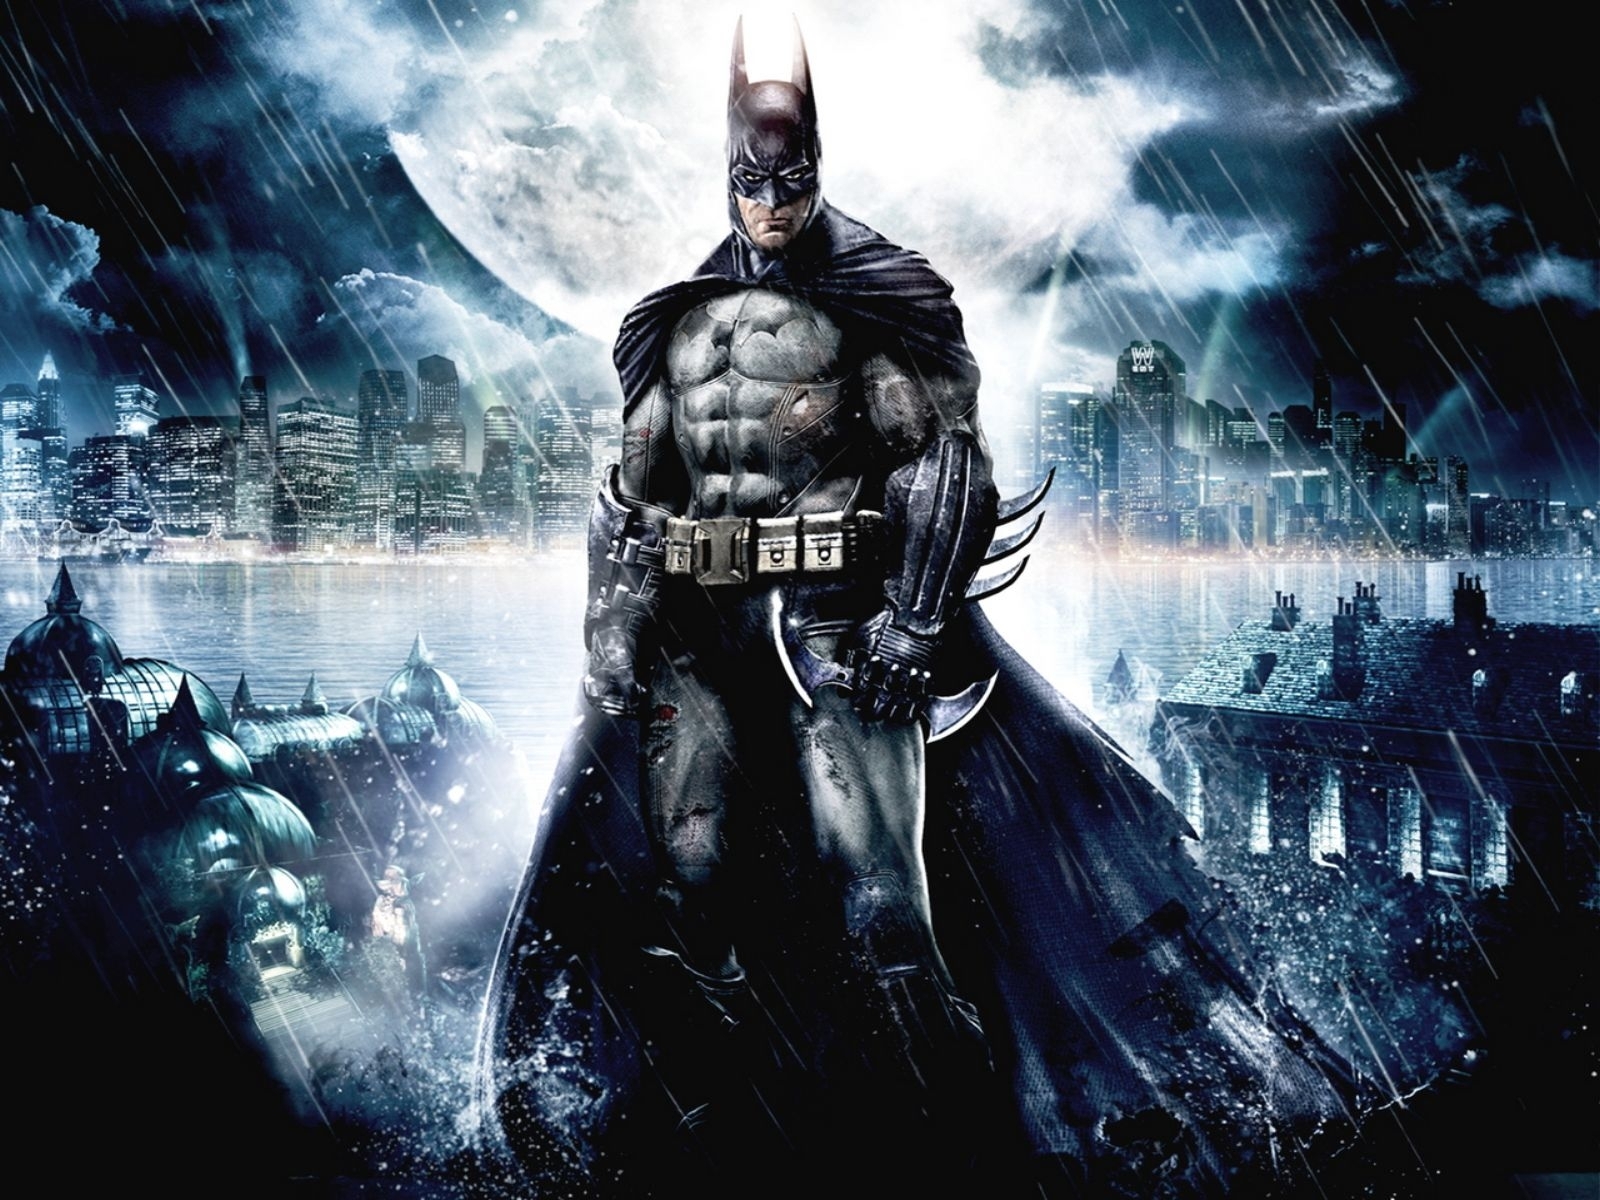 Free Download The Best Batman Wallpaper Ever Batman Wallpapers Images, Photos, Reviews